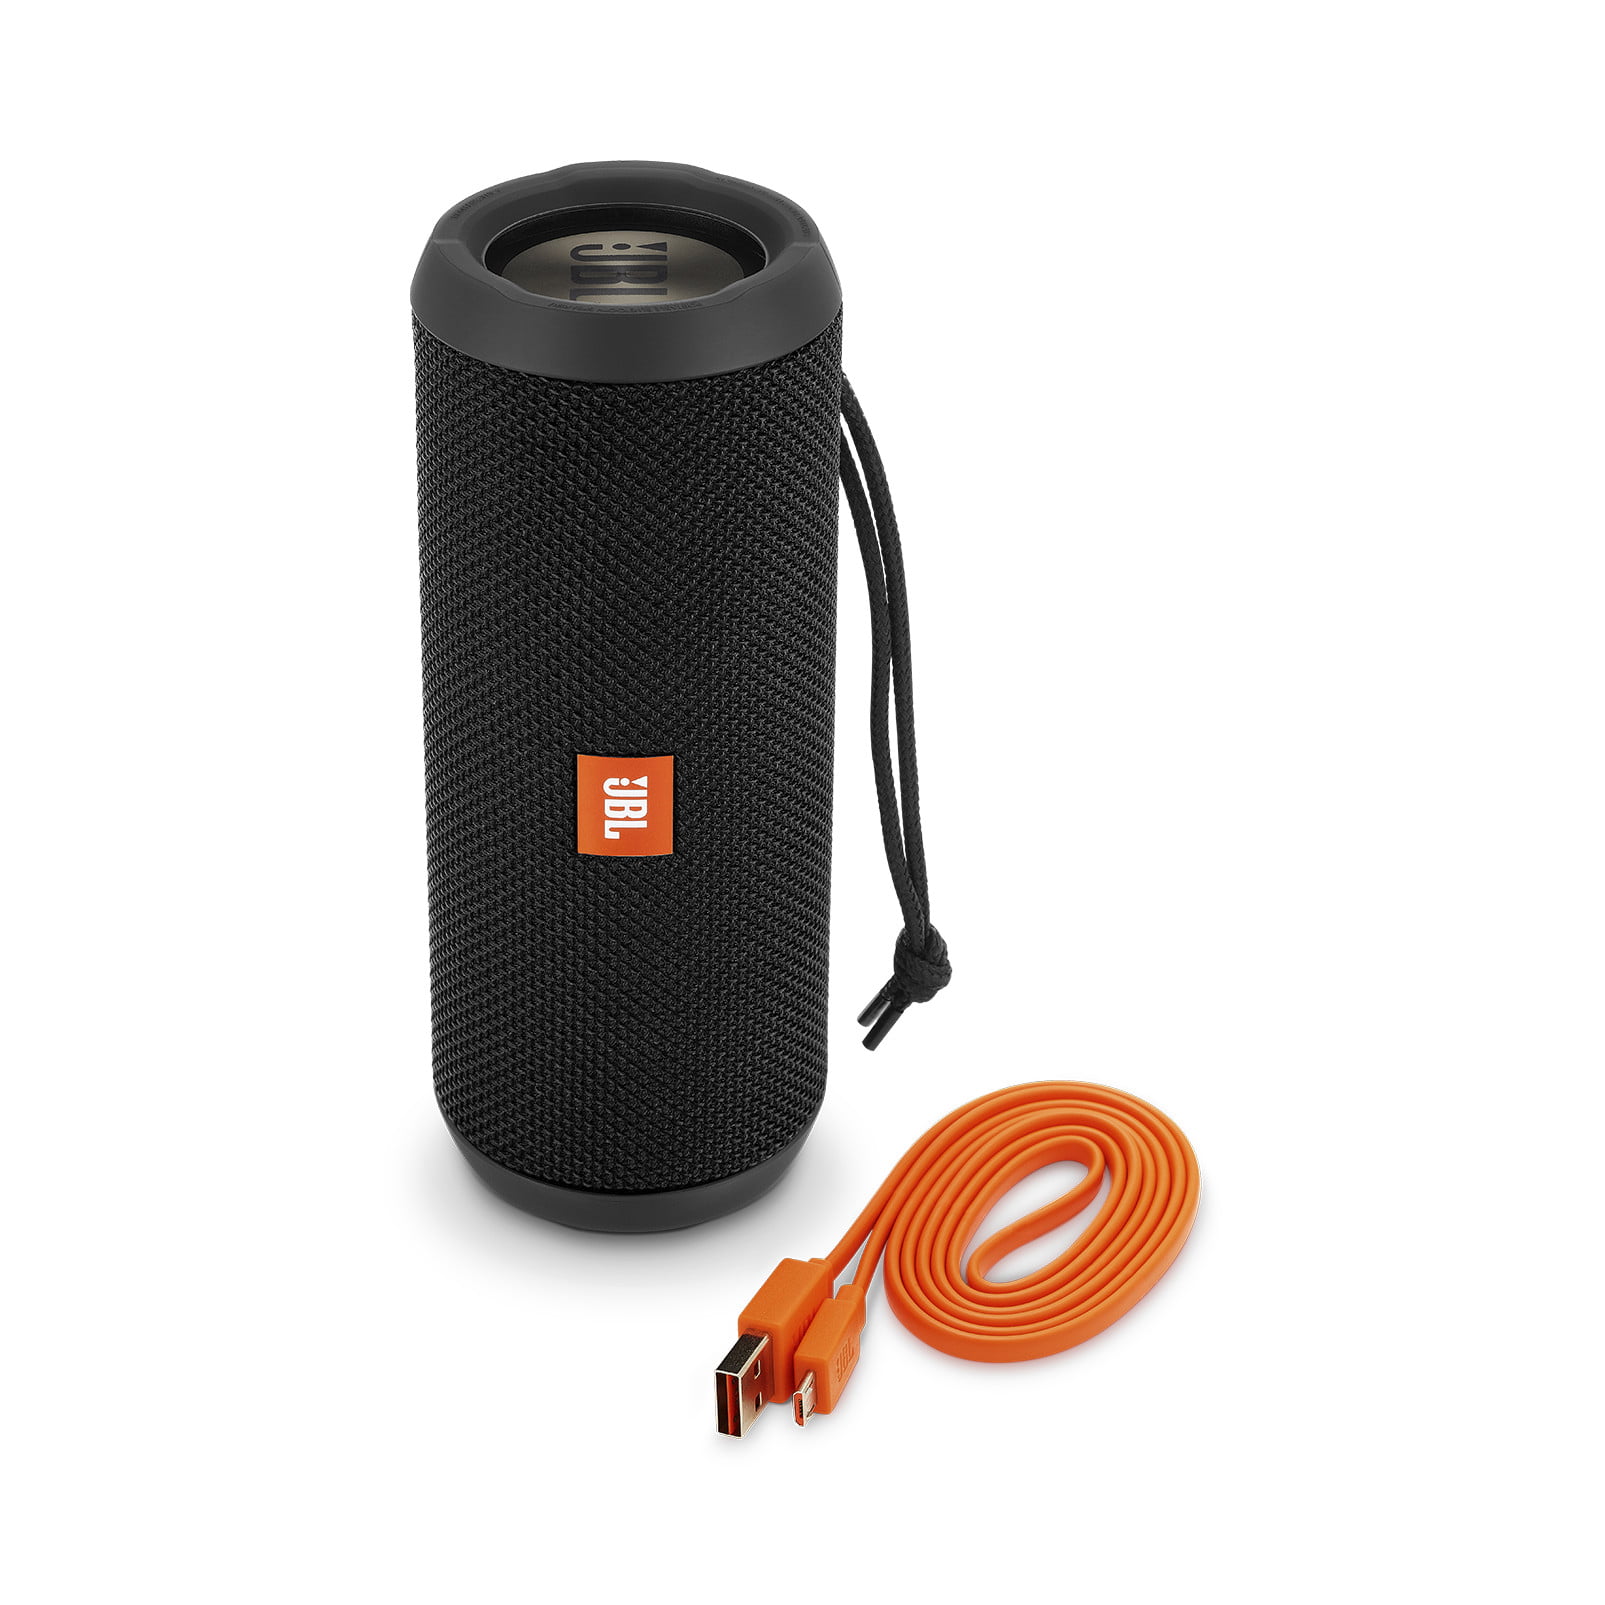 Precaución Circunstancias imprevistas luces JBL Flip 3 Stealth Portable Bluetooth Speaker, Black - Walmart.com